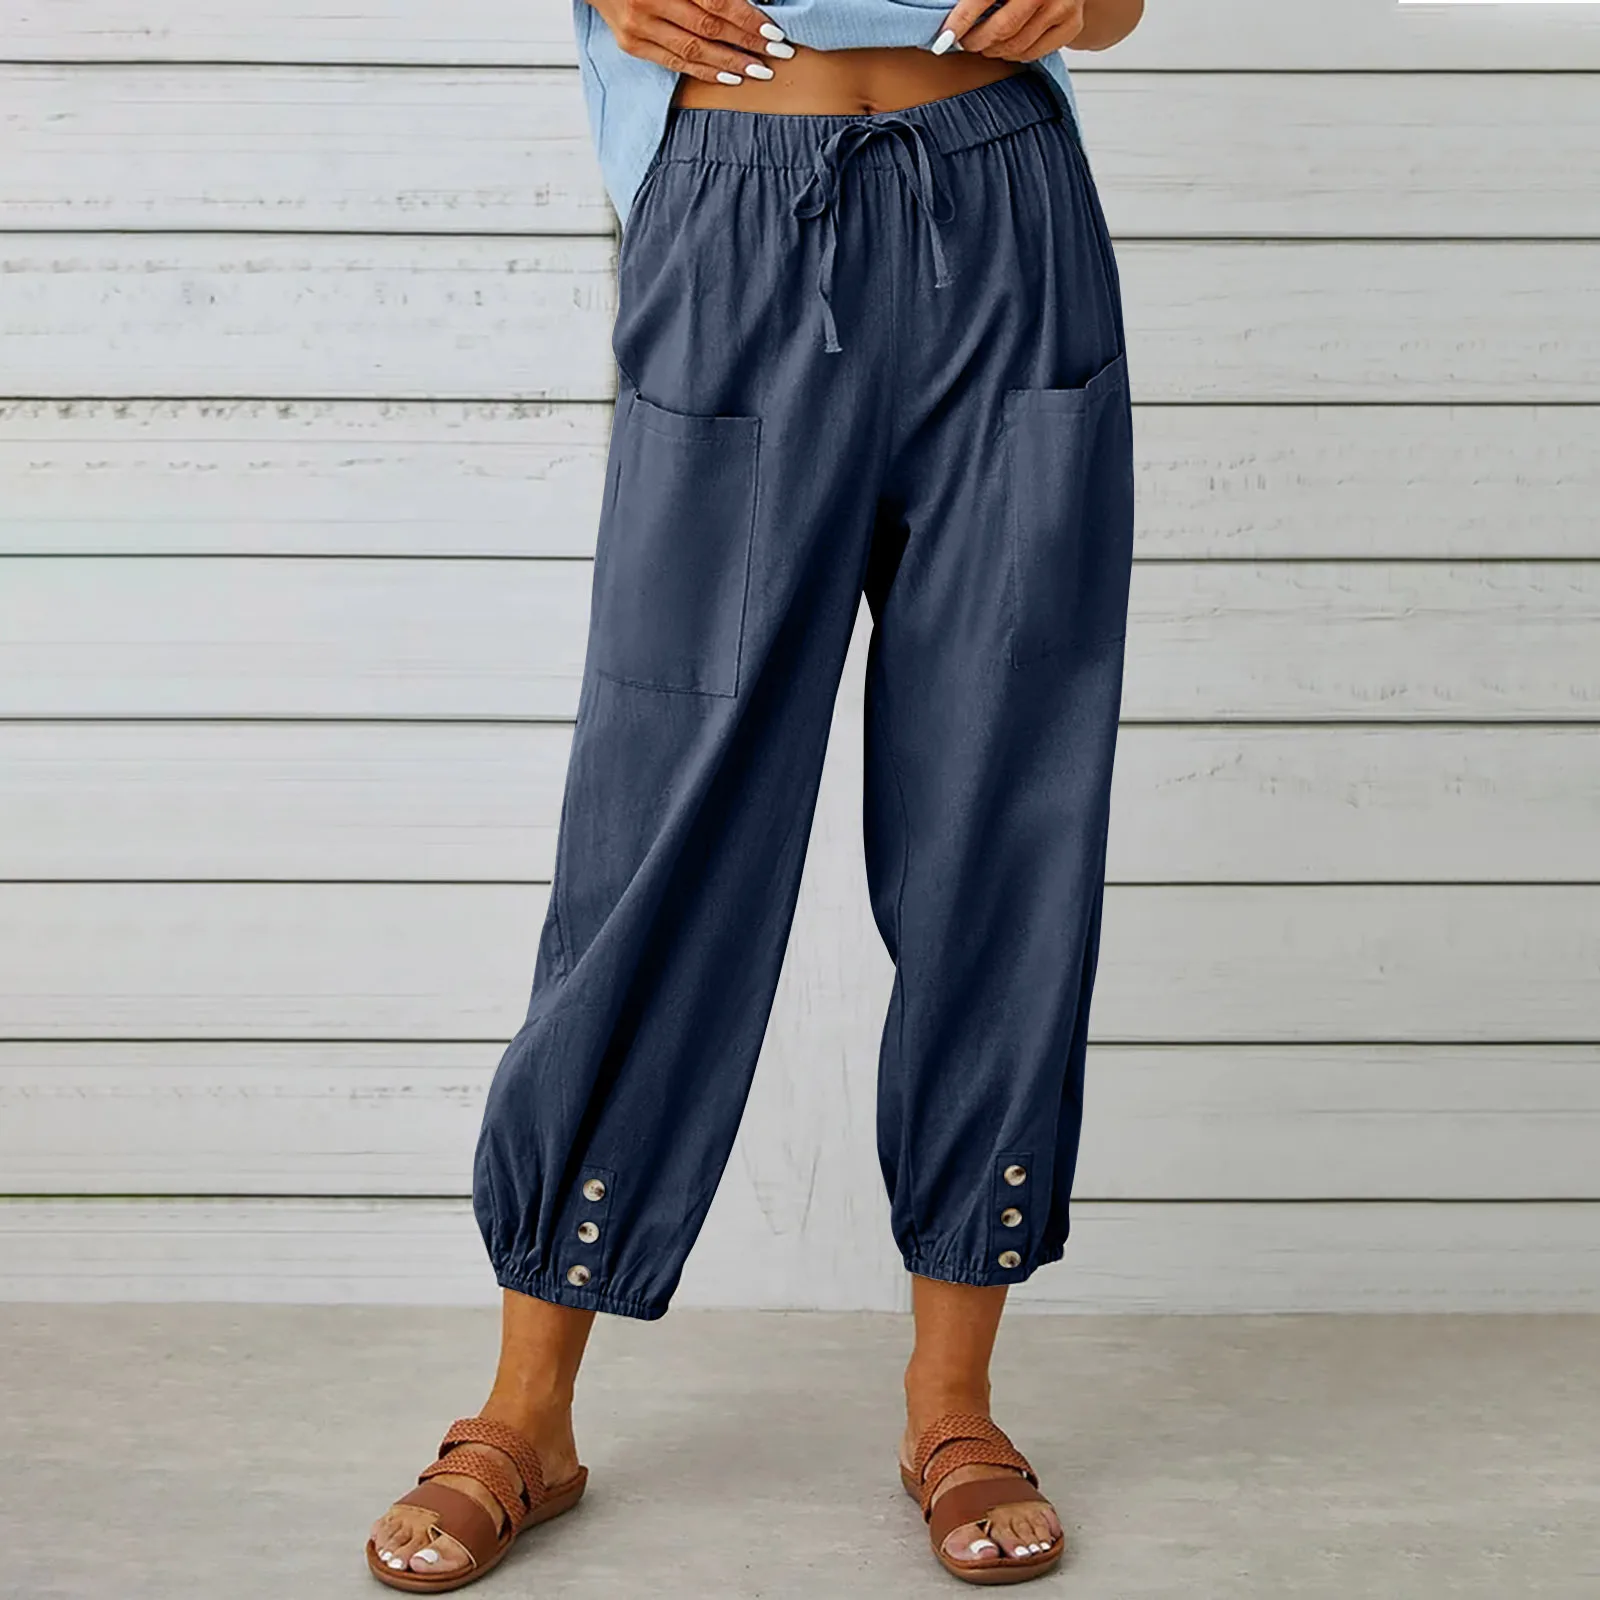 2023 new Women's Cotton Linen Pants Elastic Waist Vintage Trousers Lady Loose Casual Pants S-5XL Retro Literary Cotton Trousers